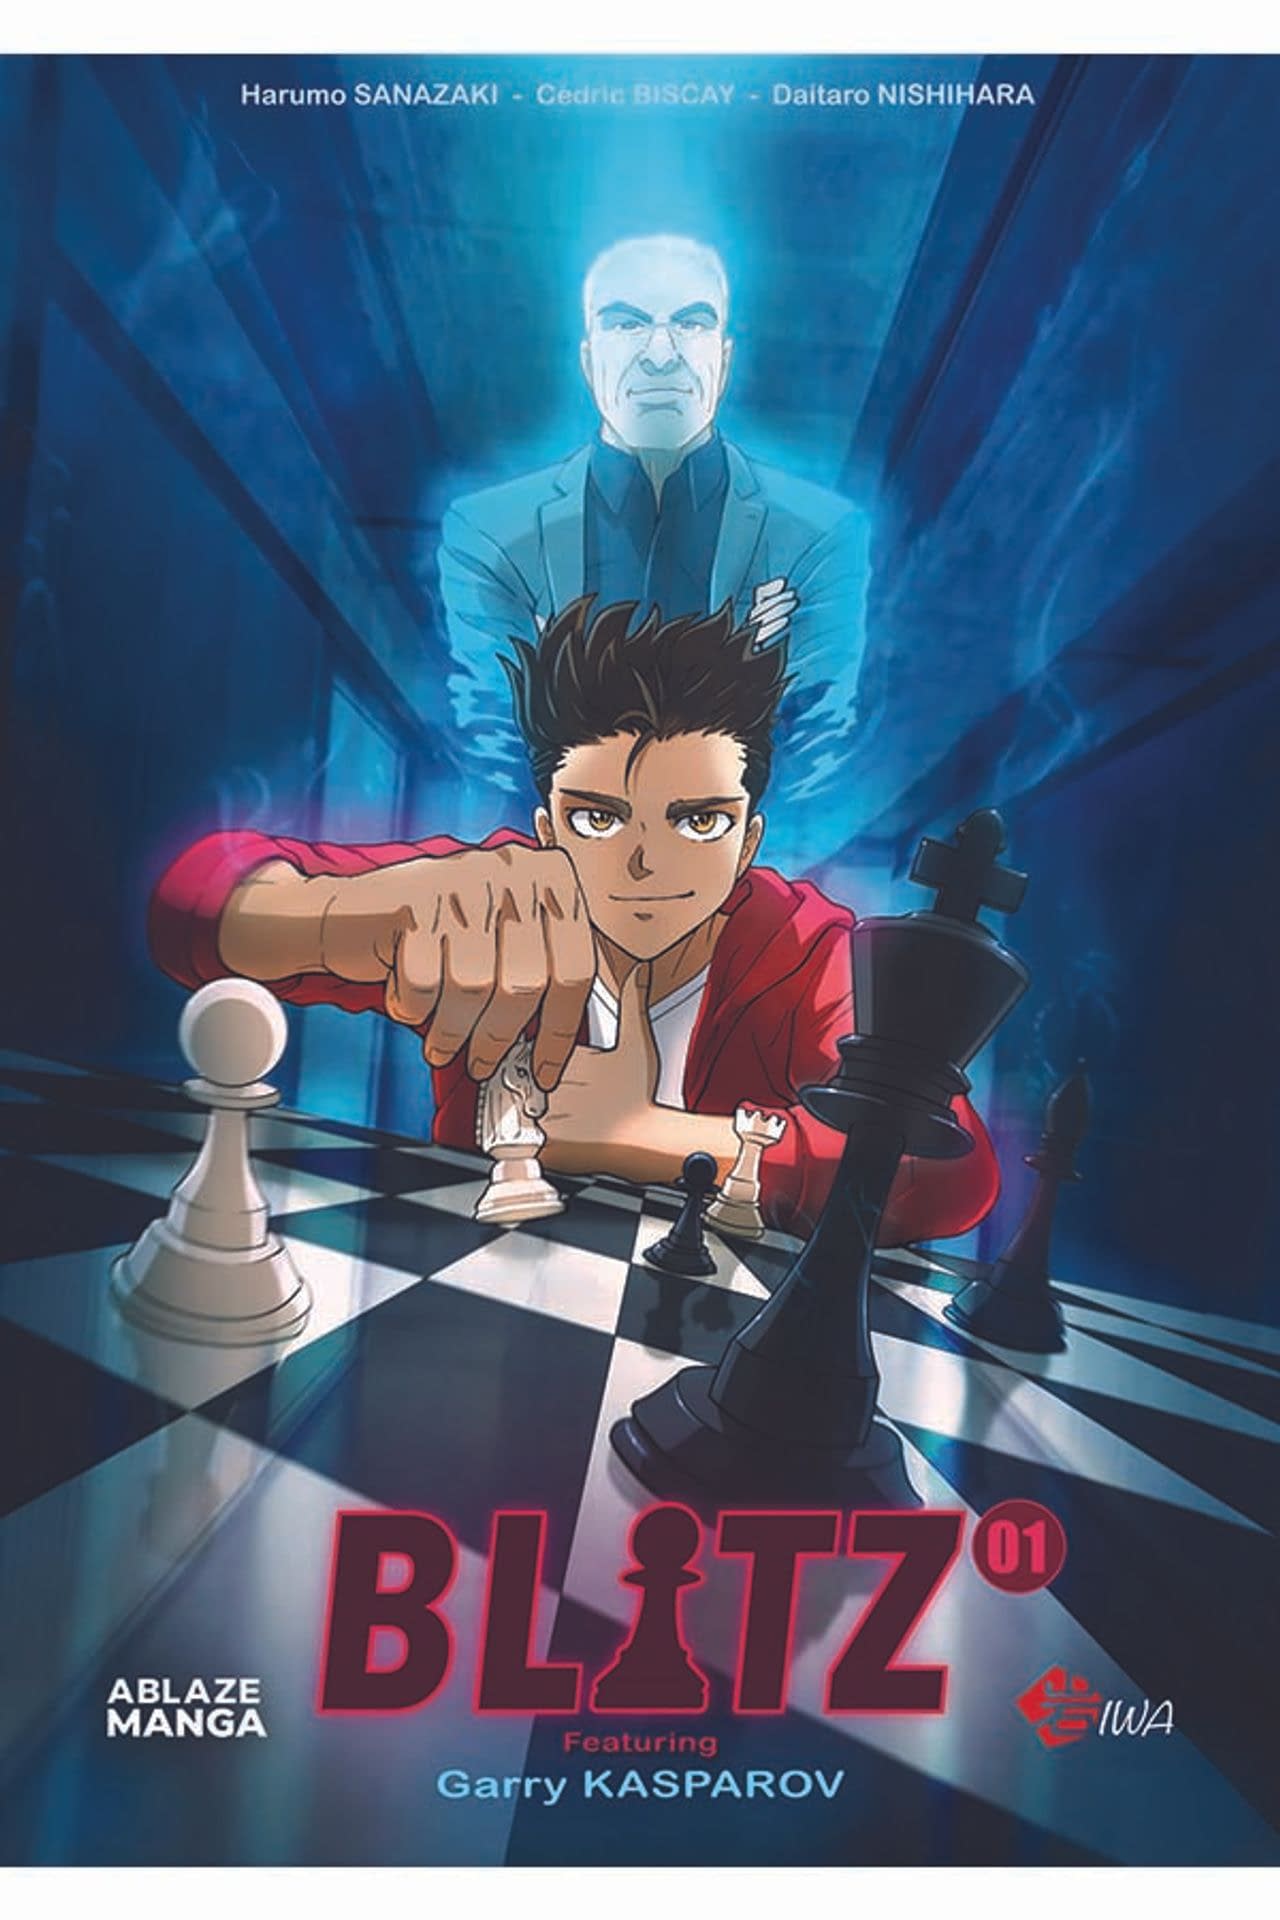 Immortal Chess Blitz Game